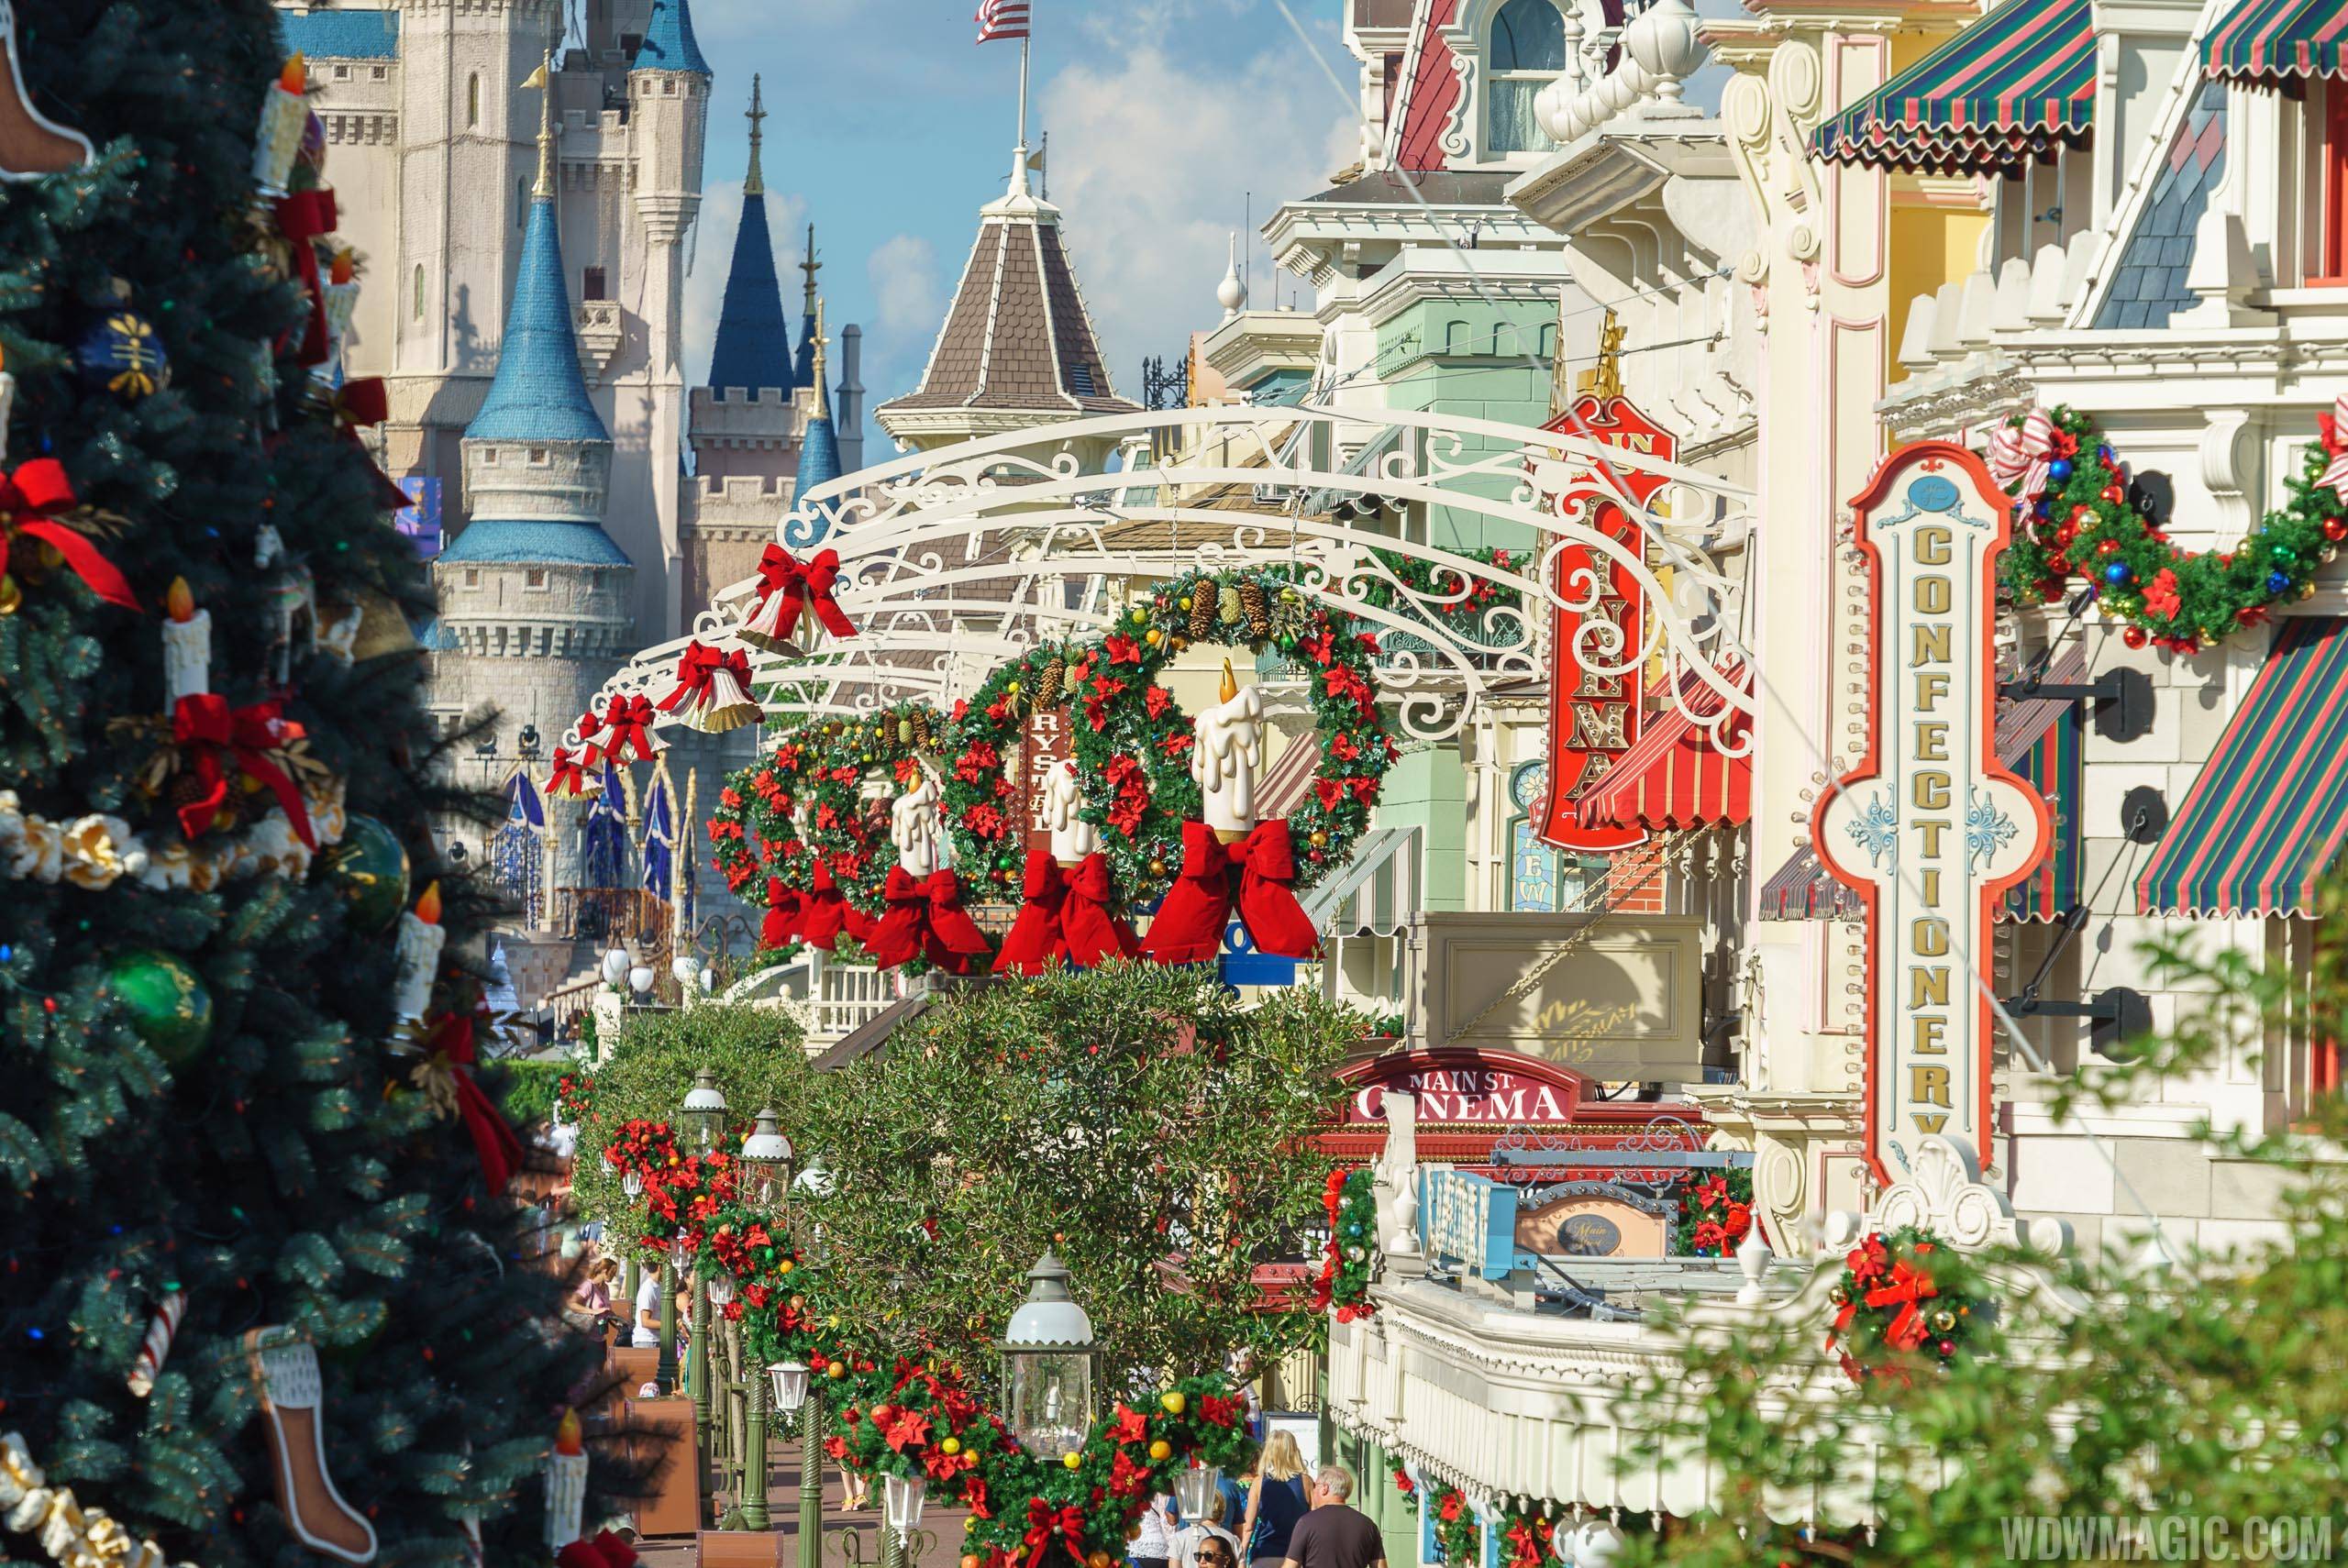 PHOTOS - The Magic Kingdom's 2017 Christmas Holiday decorations